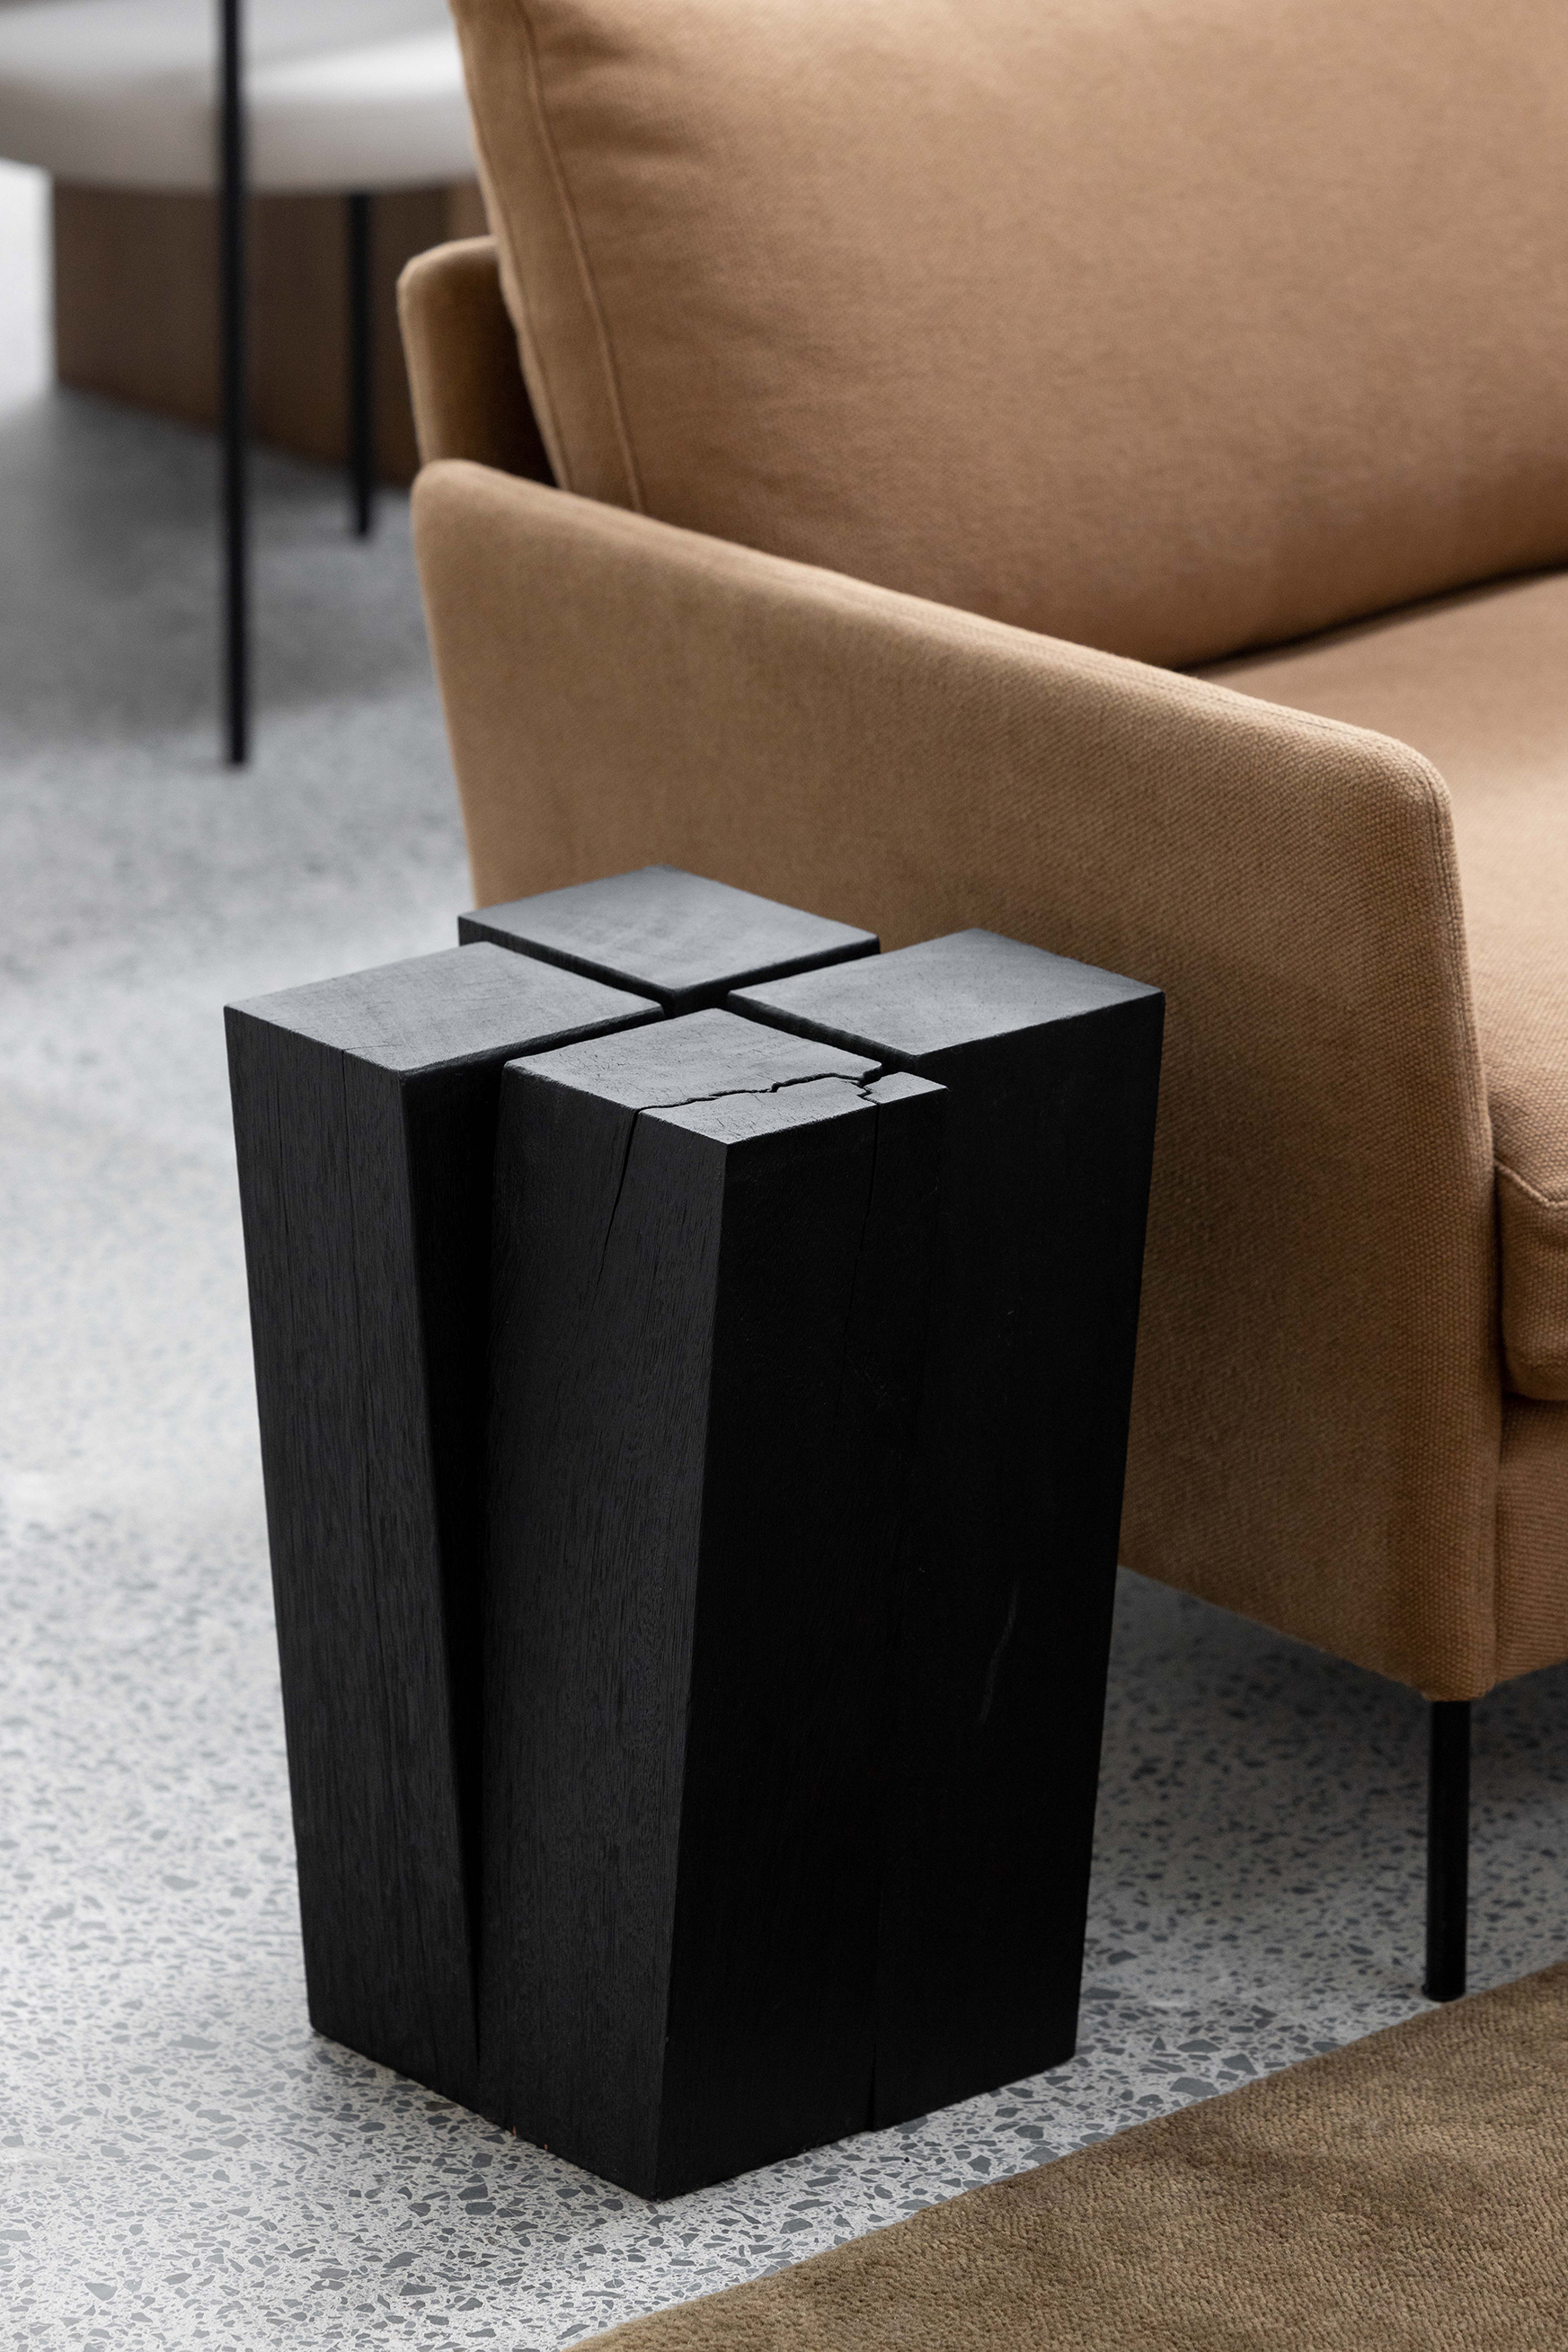 Four Leg Stool / Side Table - Black